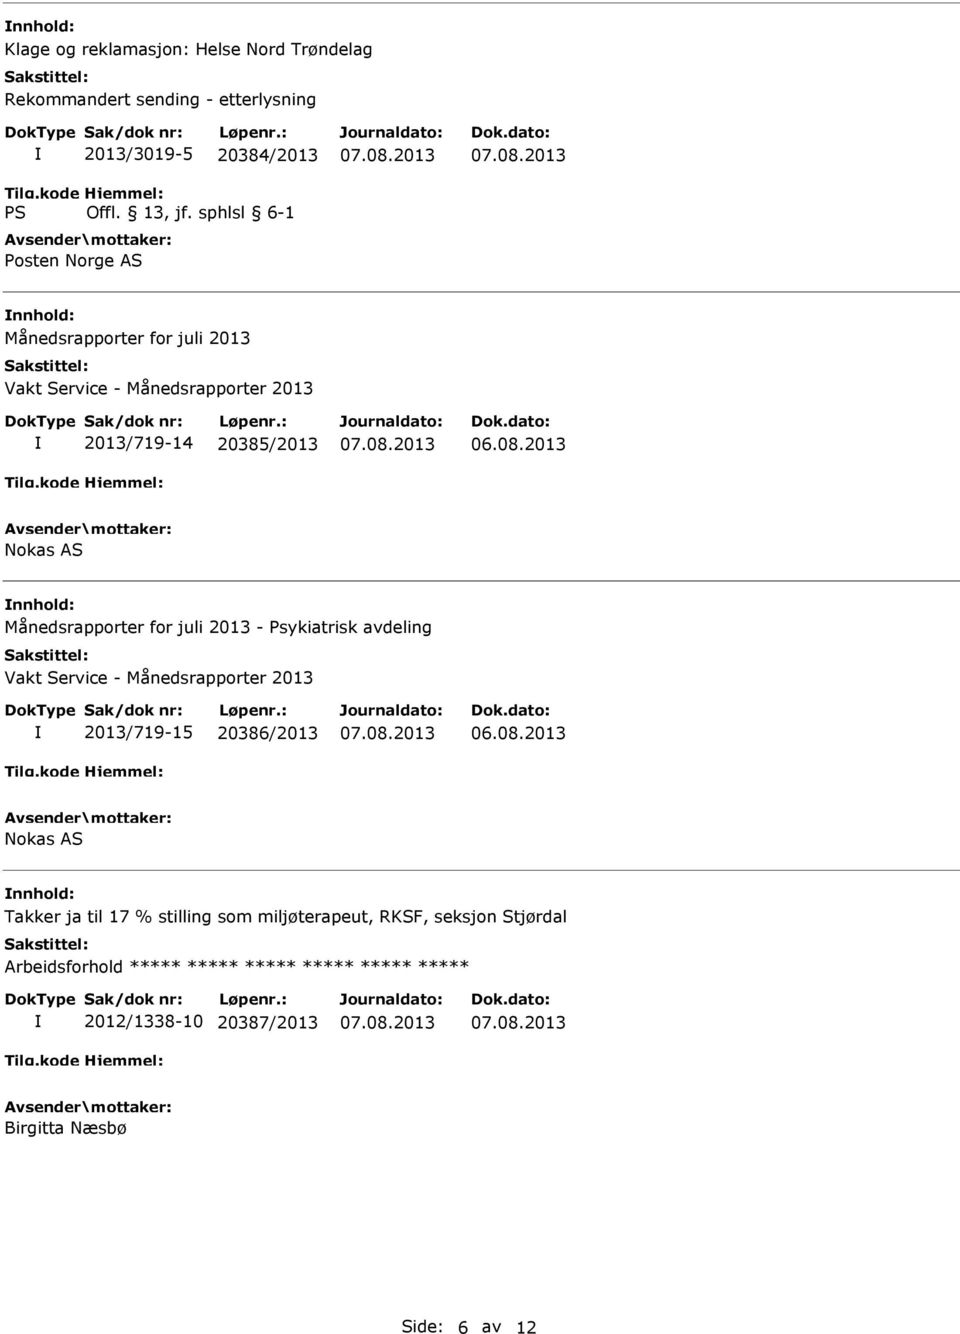 2013 Nokas AS Månedsrapporter for juli 2013 - Psykiatrisk avdeling Vakt Service - Månedsrapporter 2013 2013/719-15 20386/2013 06.08.